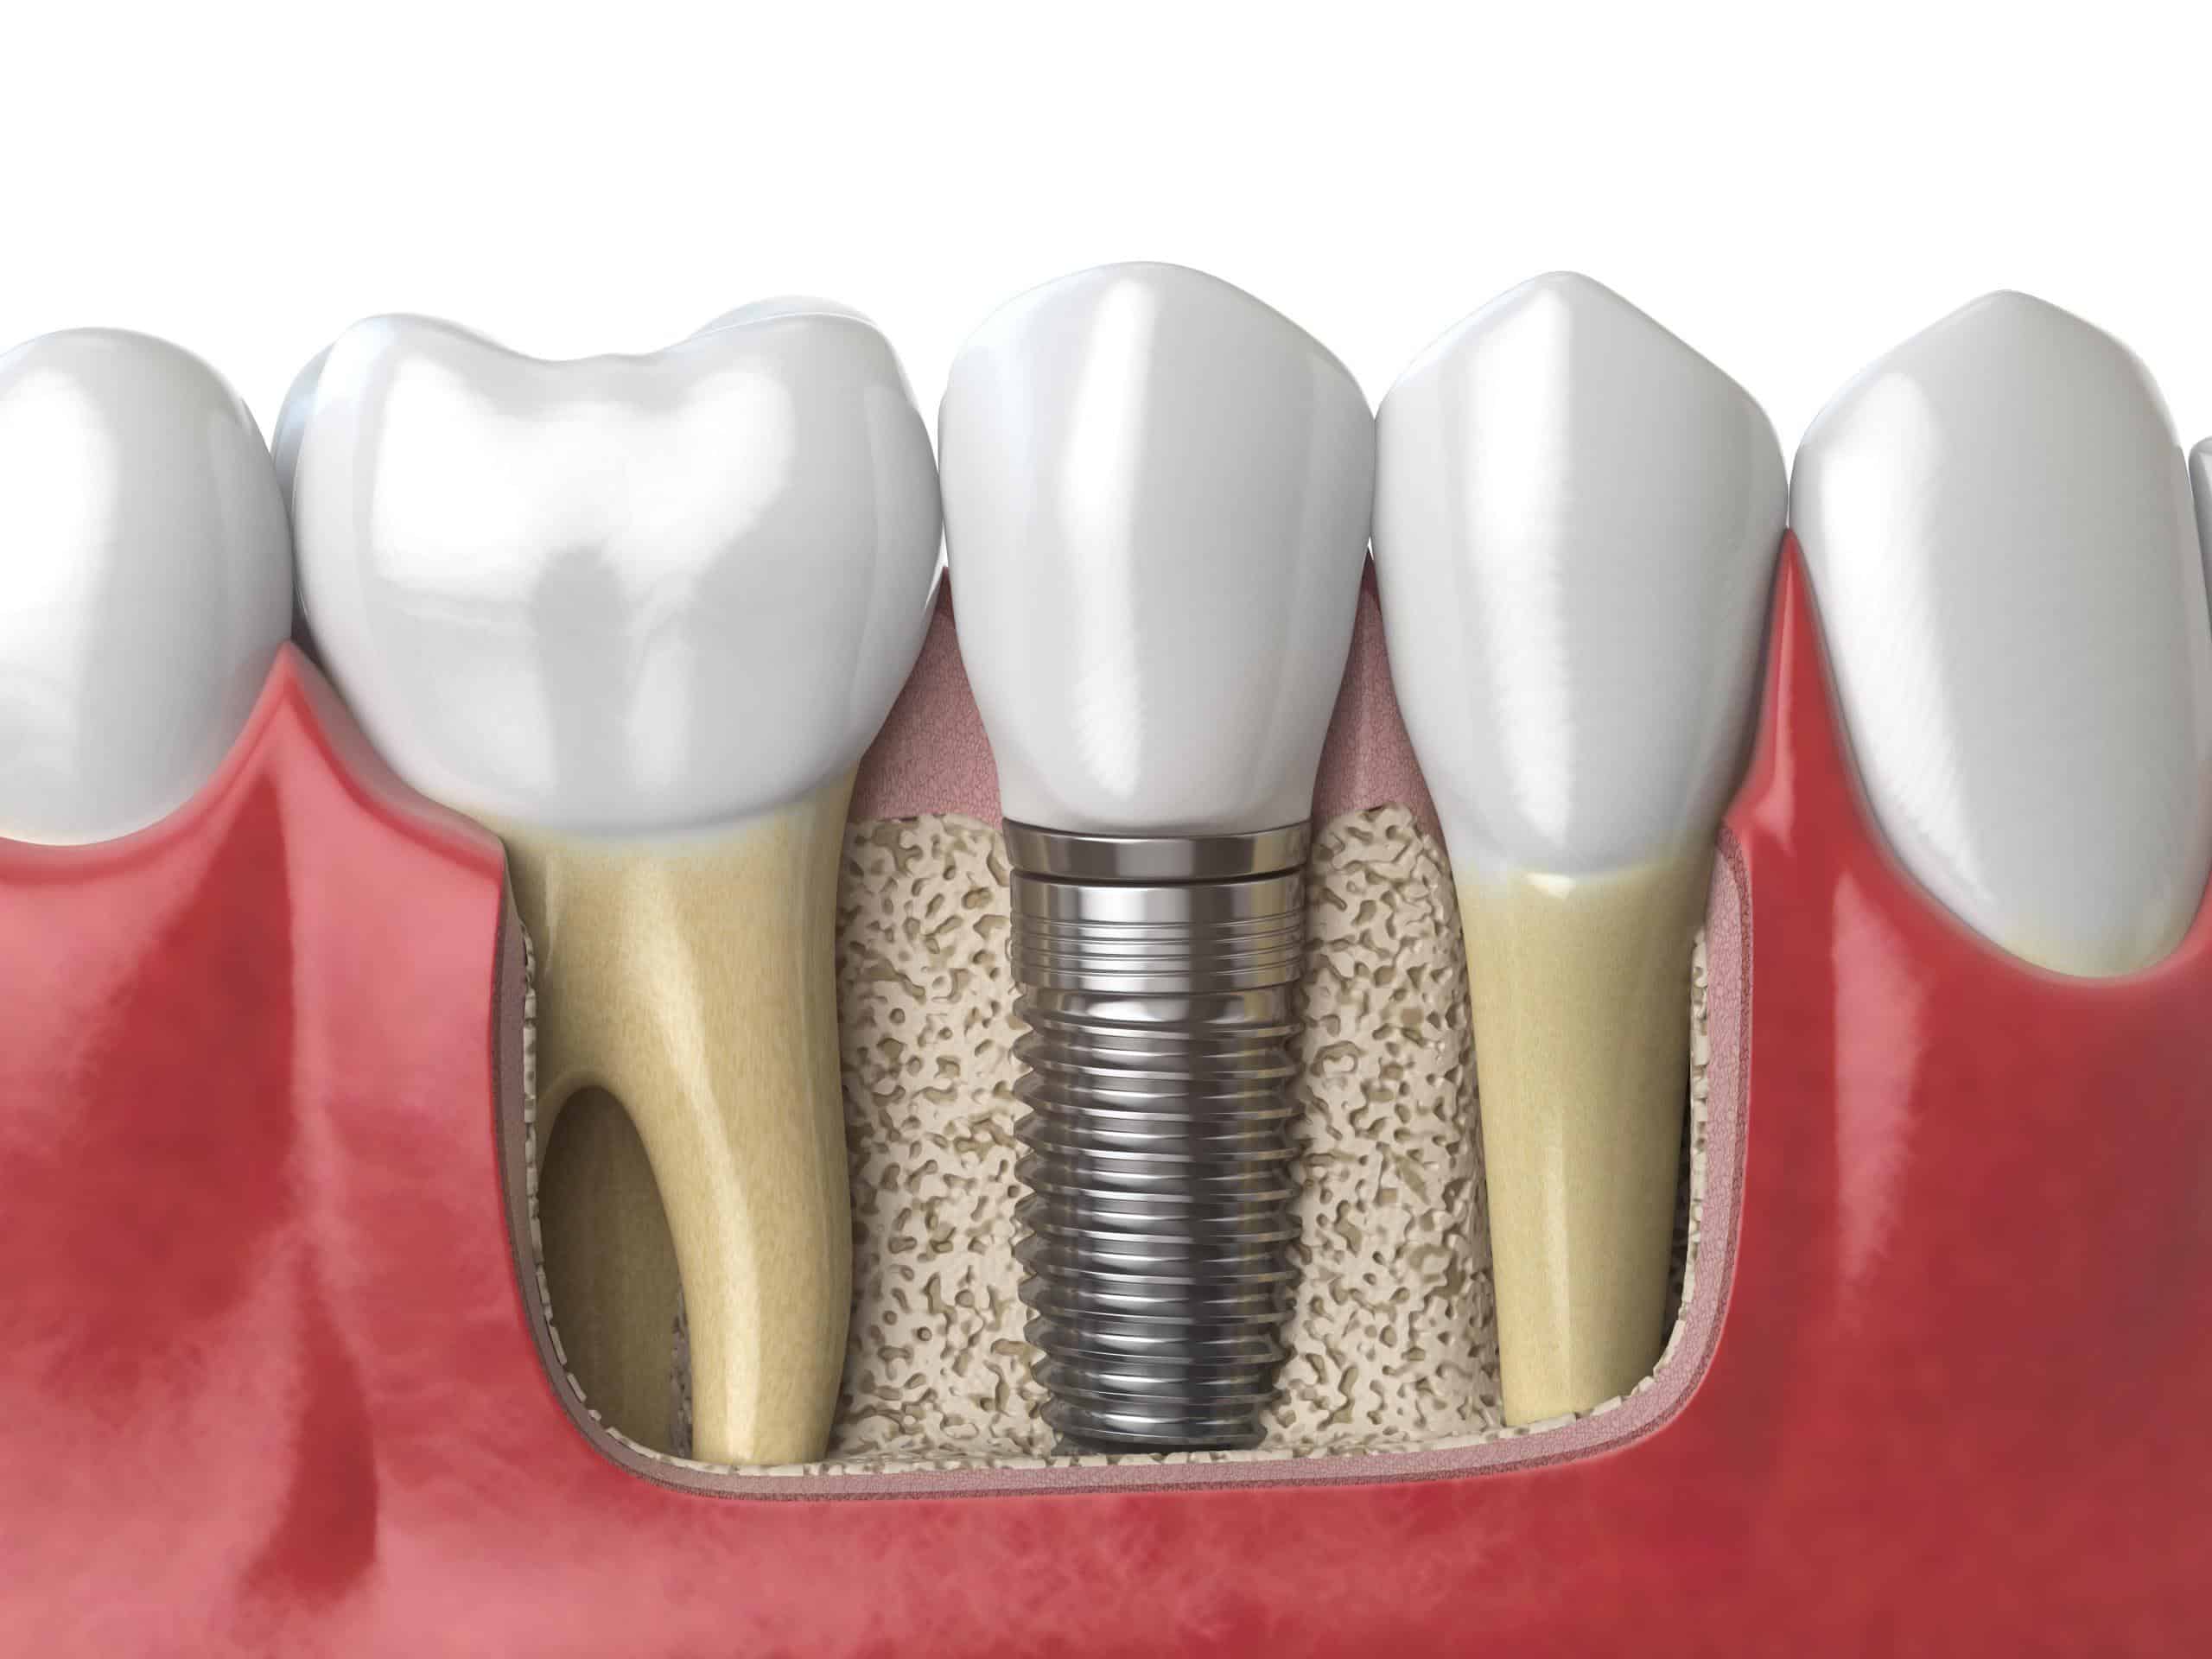 dental implants in Singapore